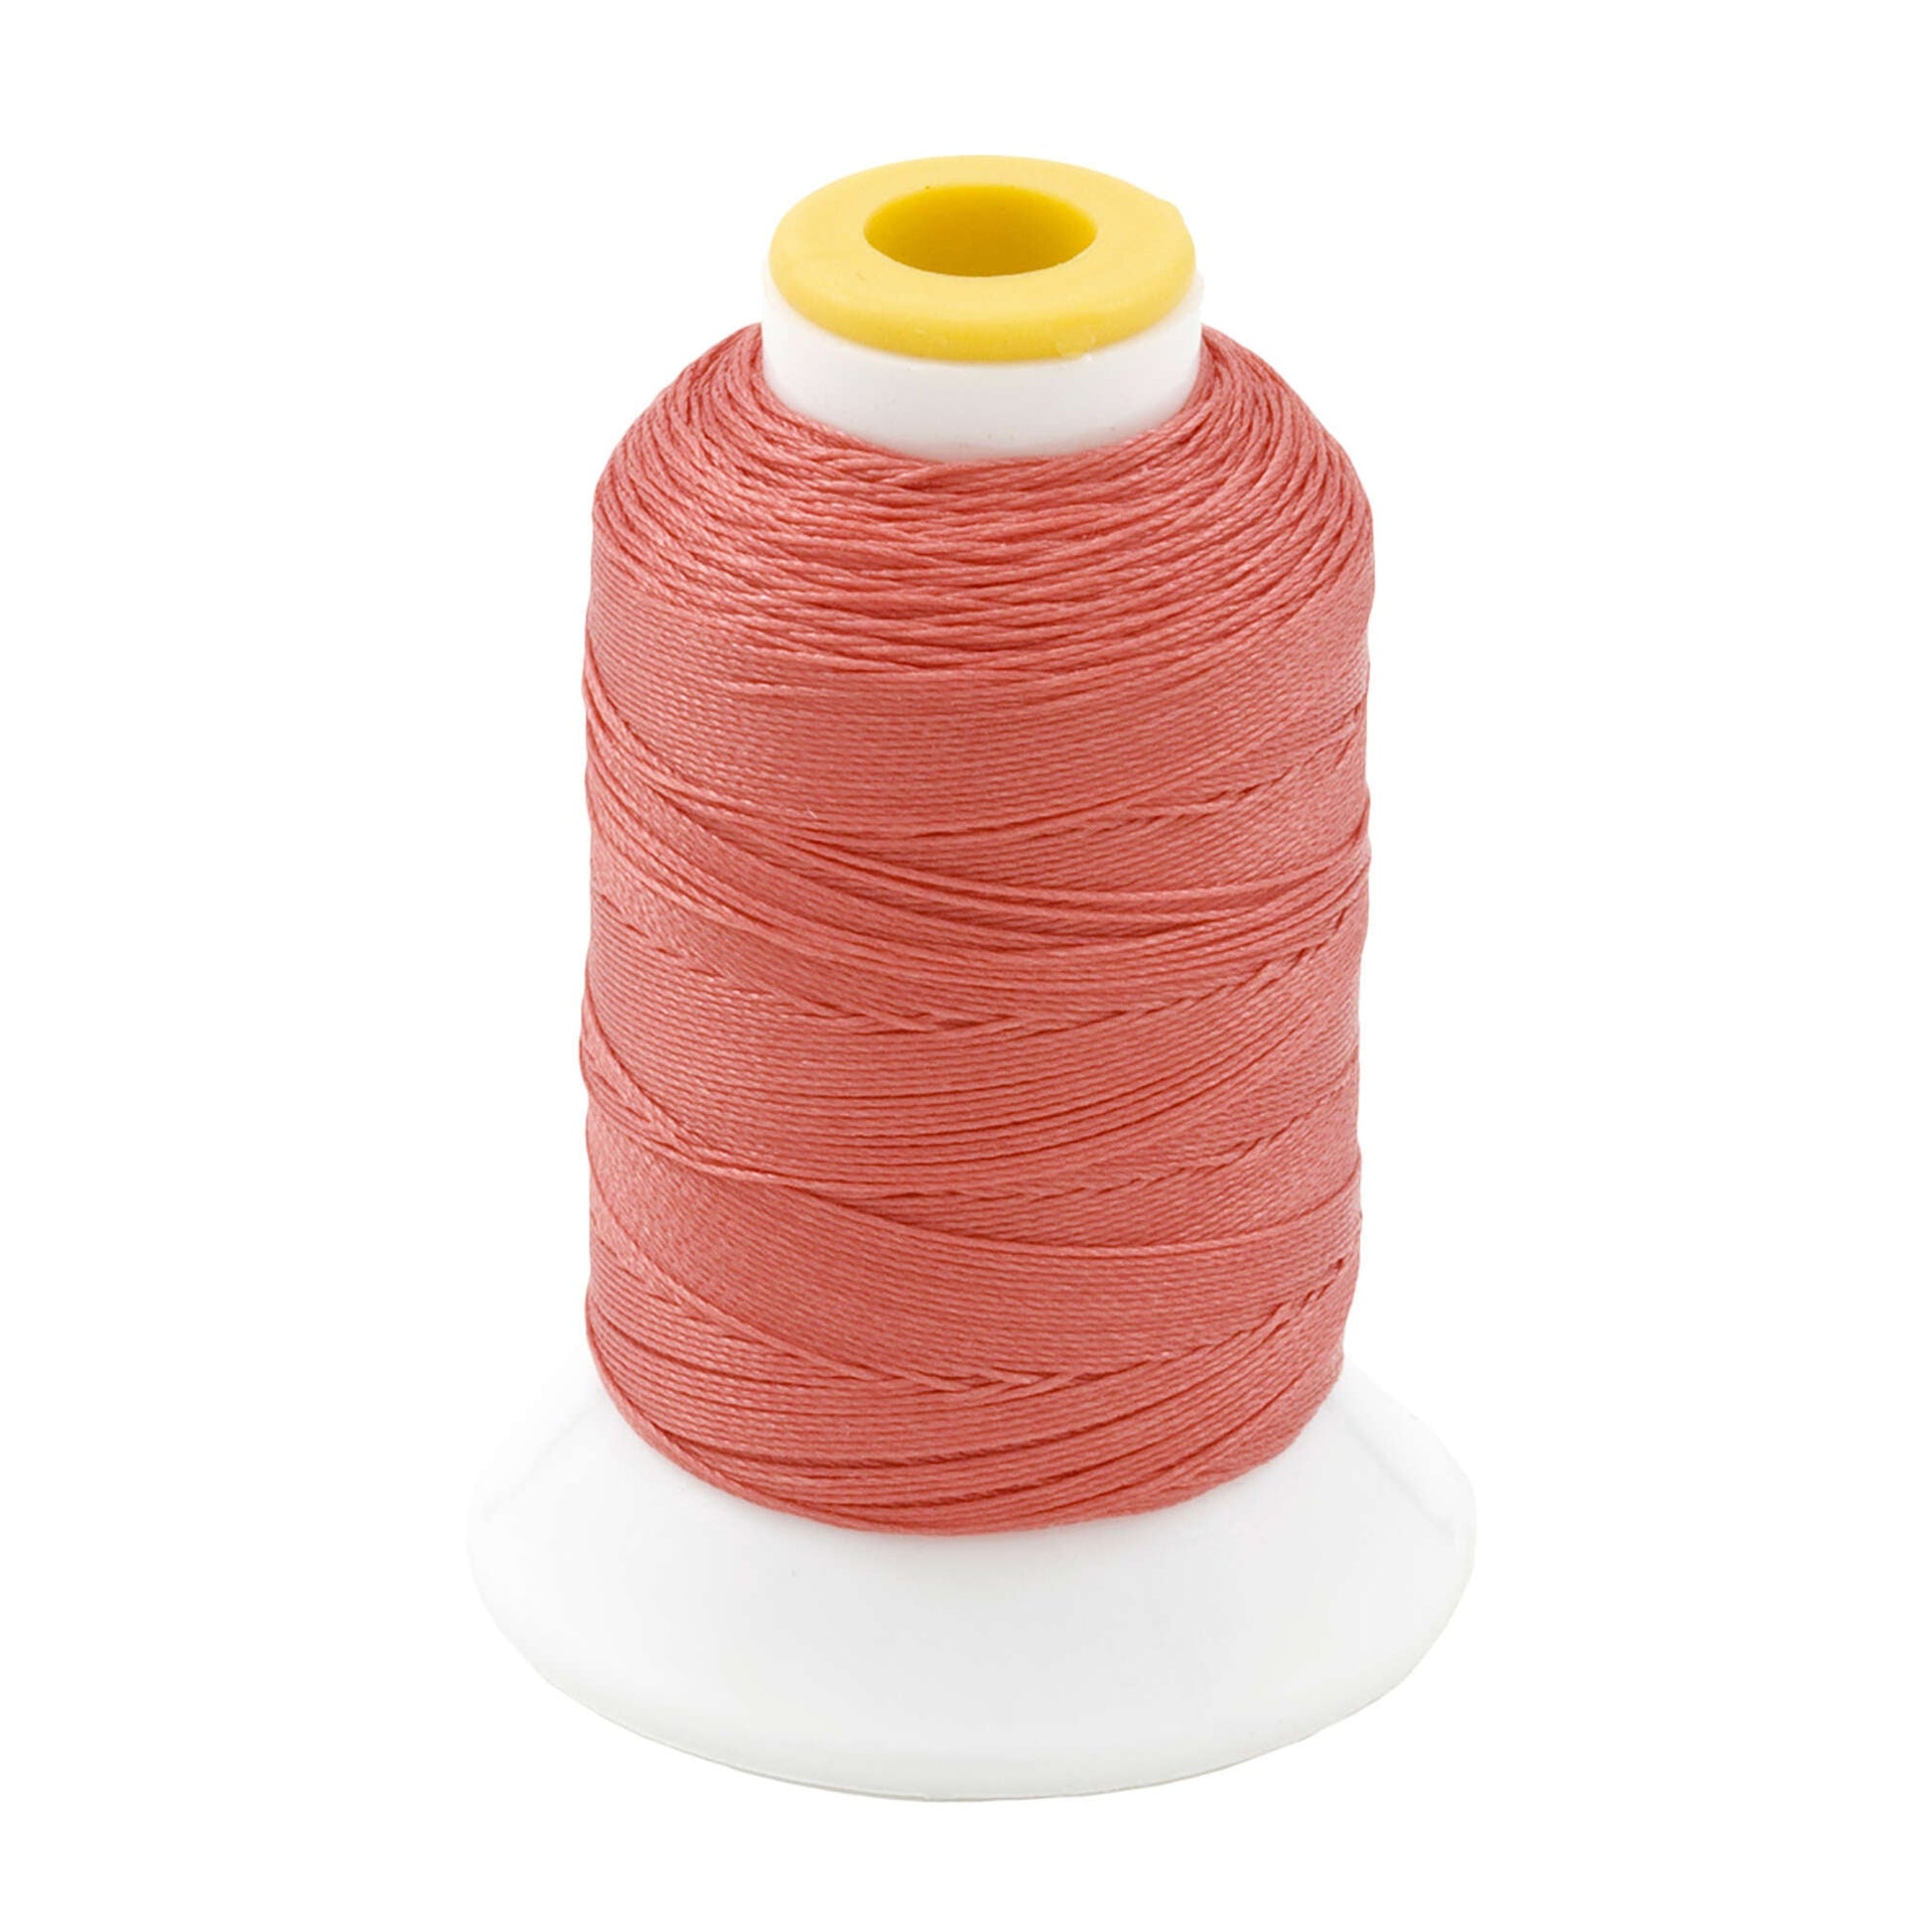 Coats & Clark Transparent Polyester Thread - Clear or Smoke - Stonemountain  & Daughter Fabrics